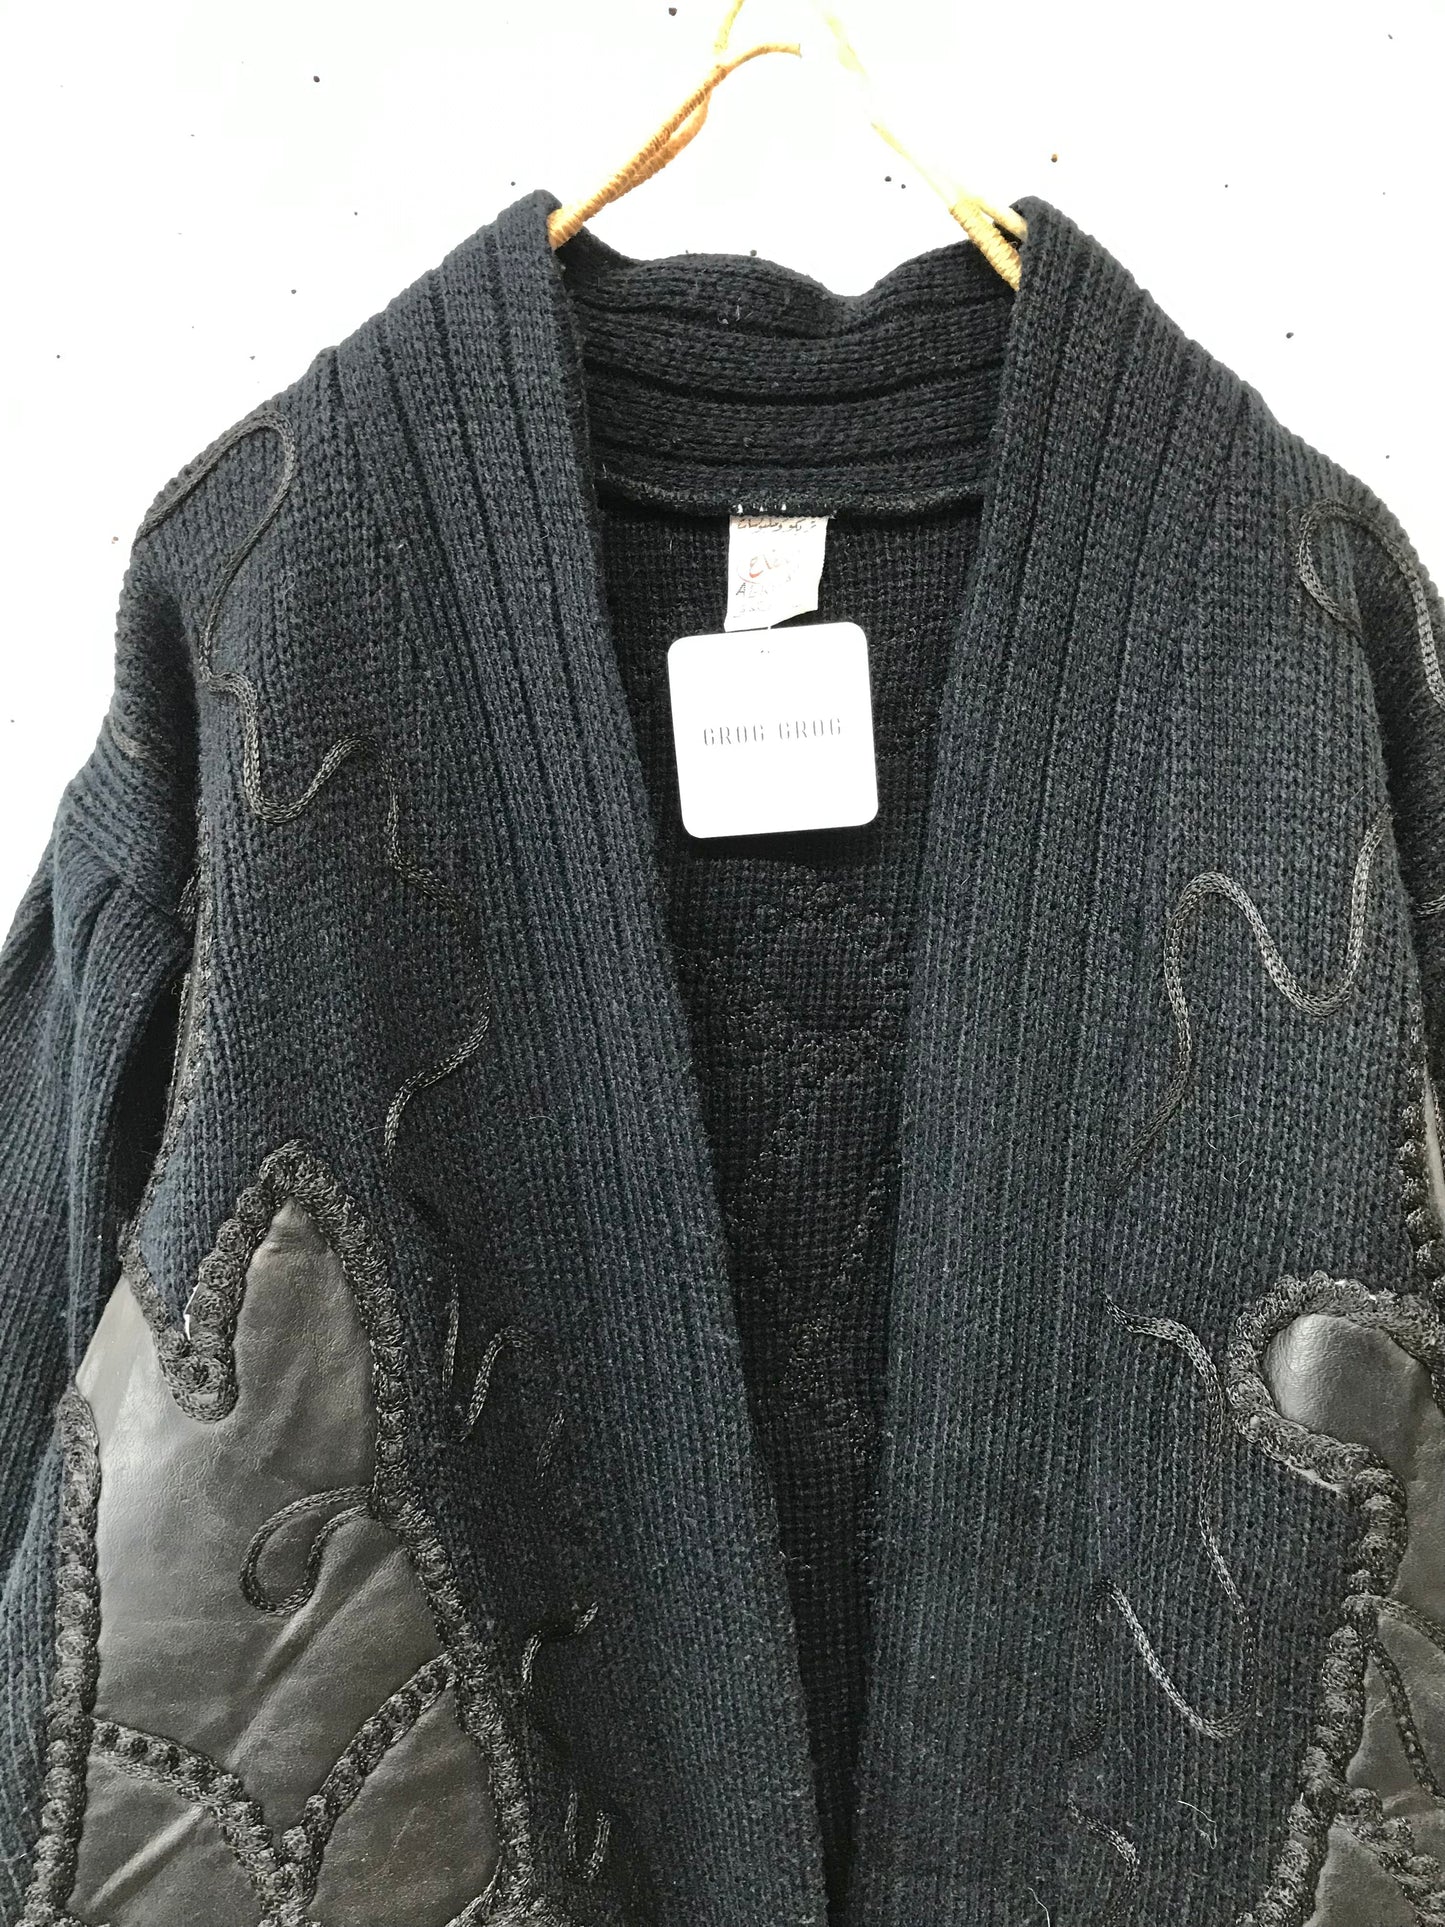 Vintage Knit Cardigan [K25673]